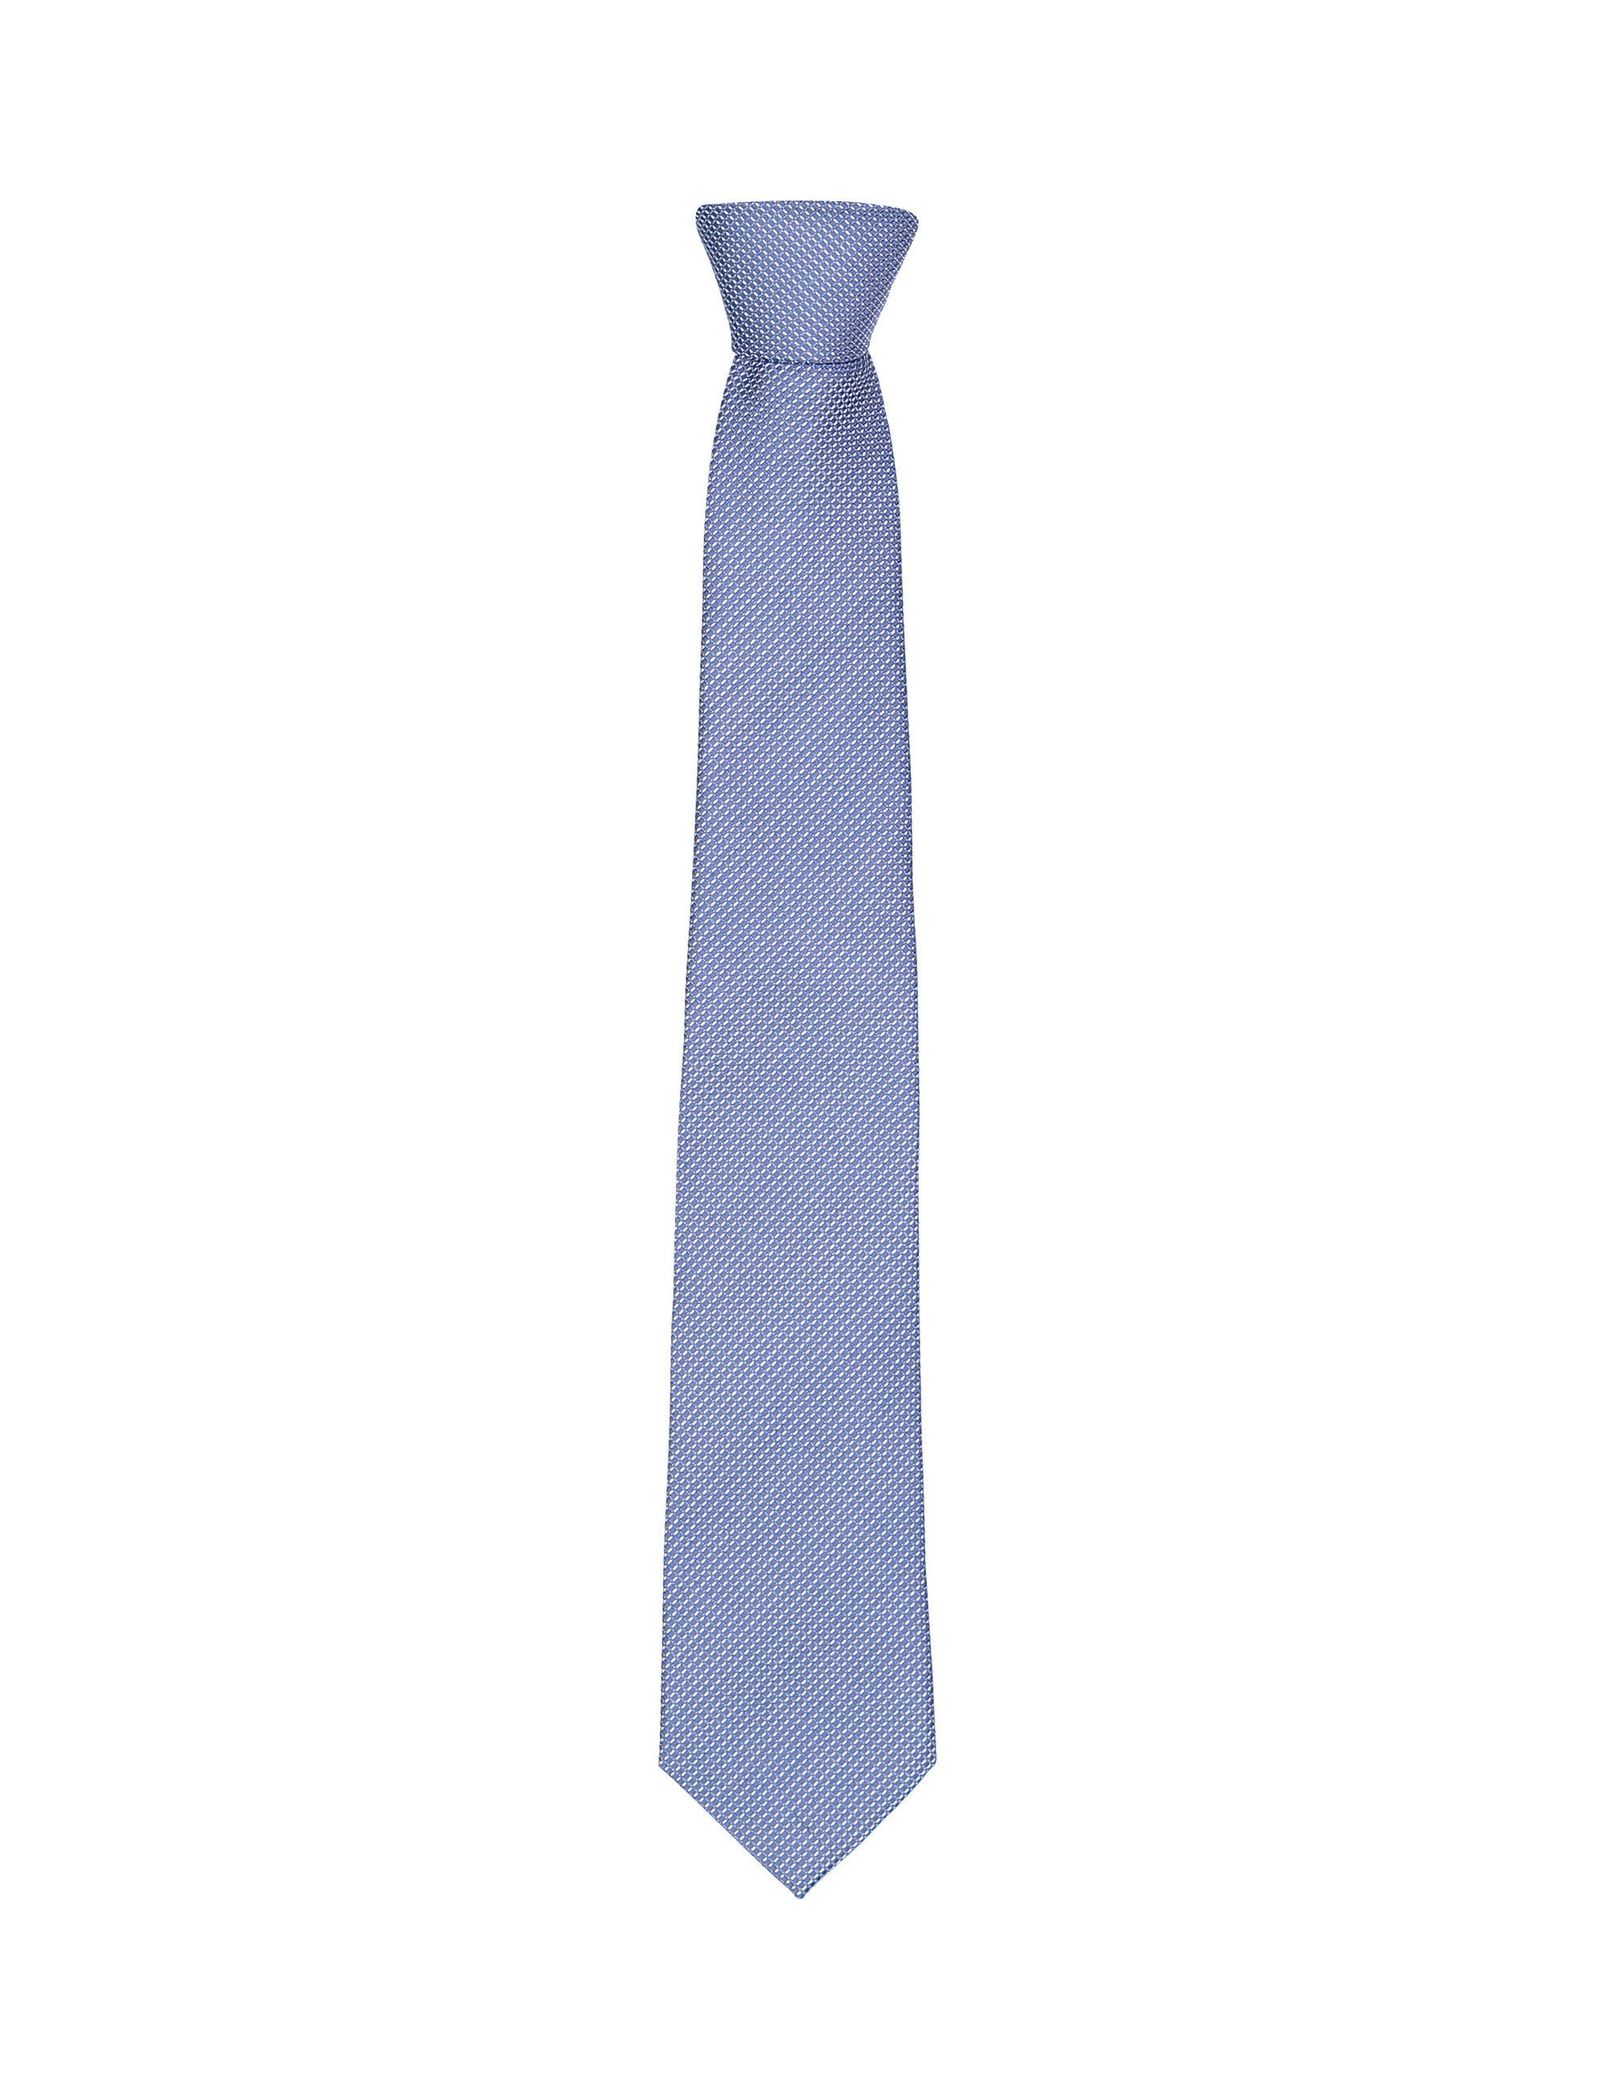 کراوات مانگو مدل 23090555 تک سایز - آبي روشن - 2